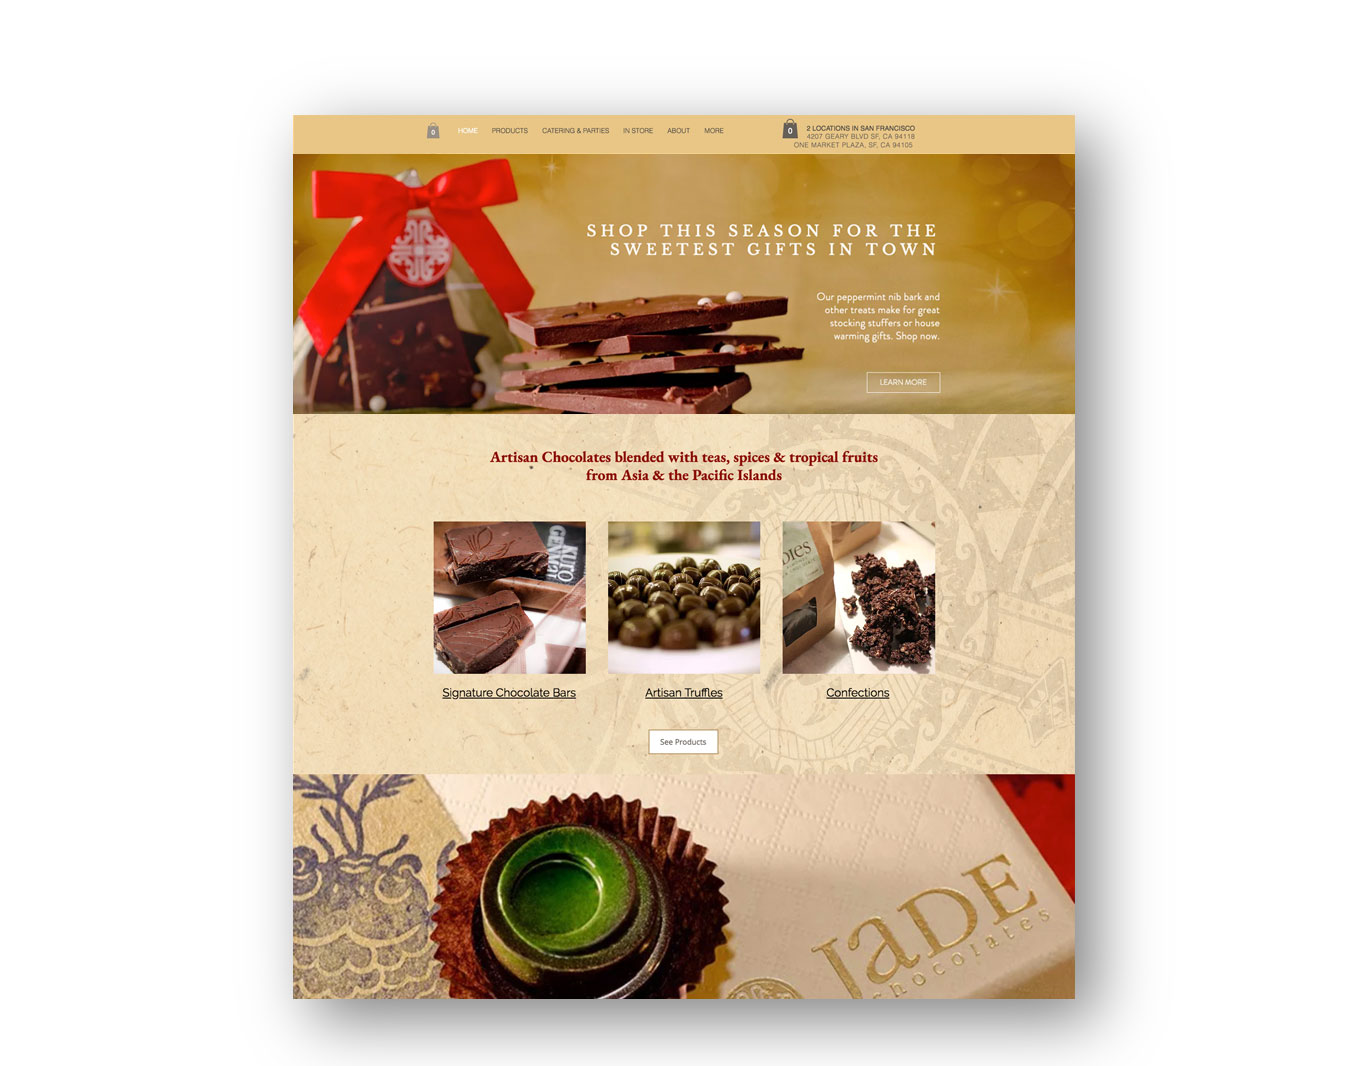 Web Banners- Jade Chocolates